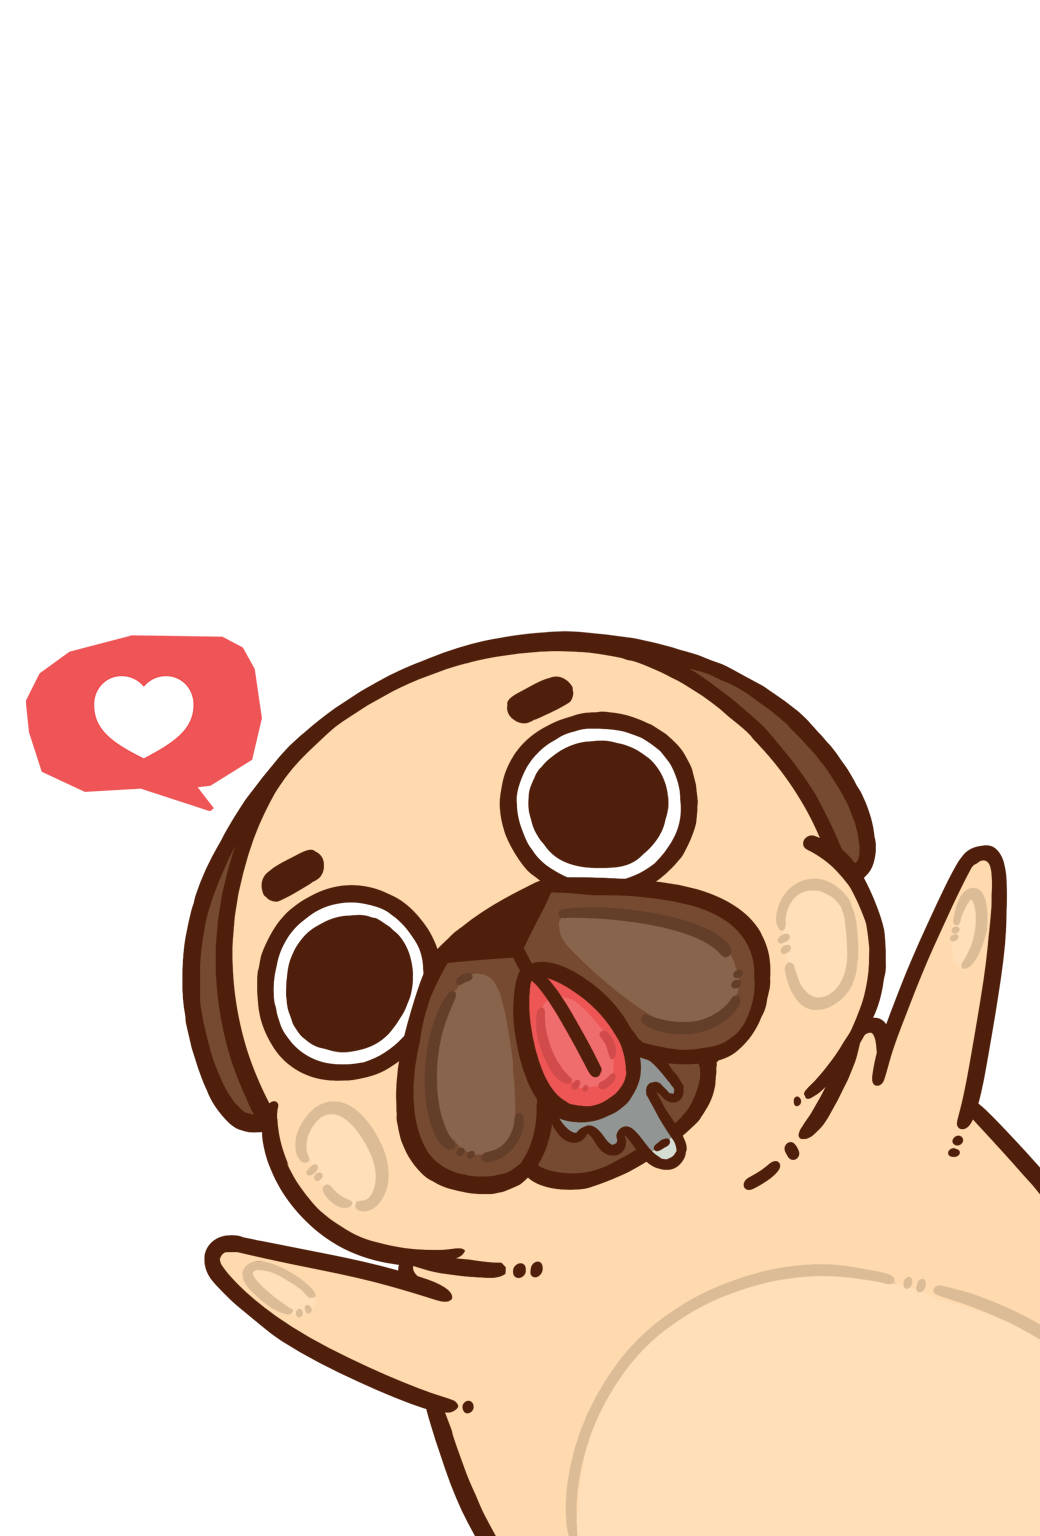 Cartoon Pug Dog With Heart Wallpaper